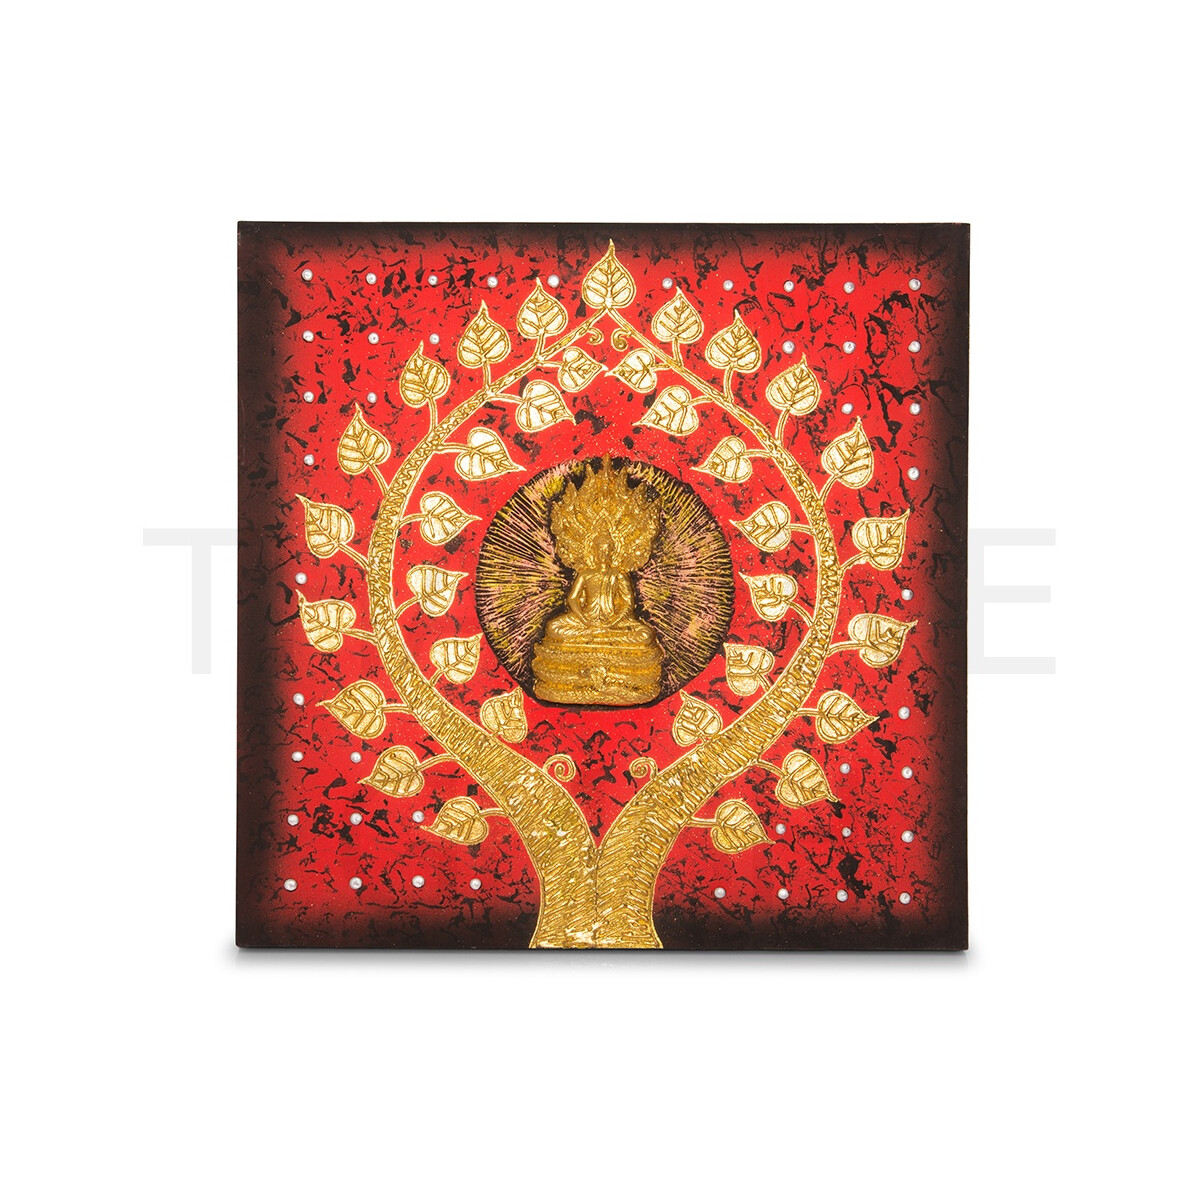 Cuadro tailandés Buda sentado rojo-oro - 60 x 60 cm